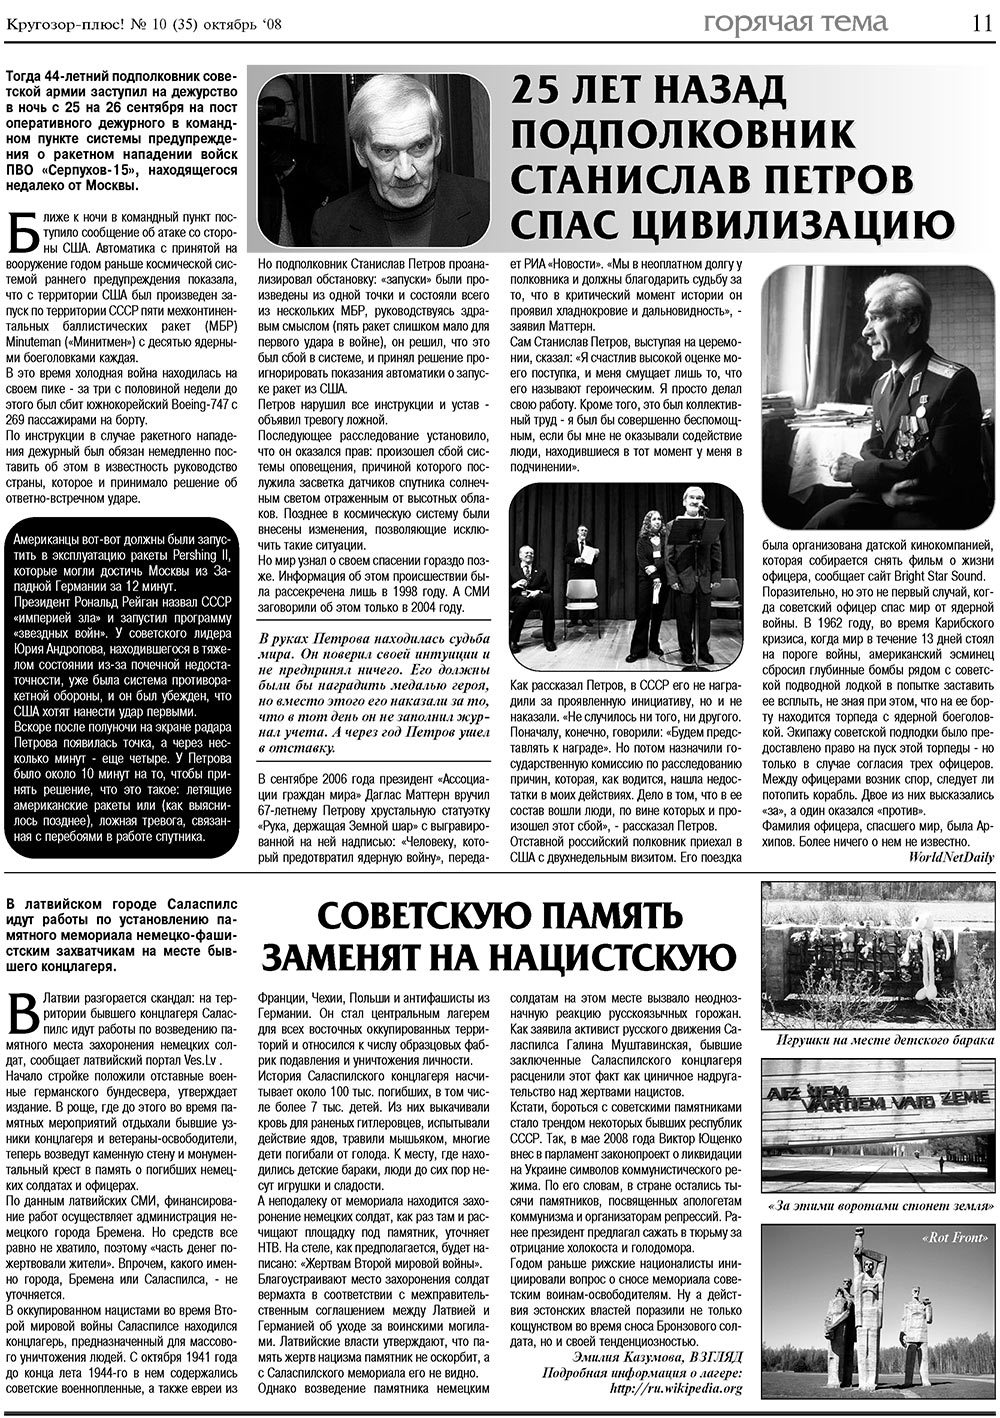 Кругозор плюс! (газета). 2008 год, номер 10, стр. 11